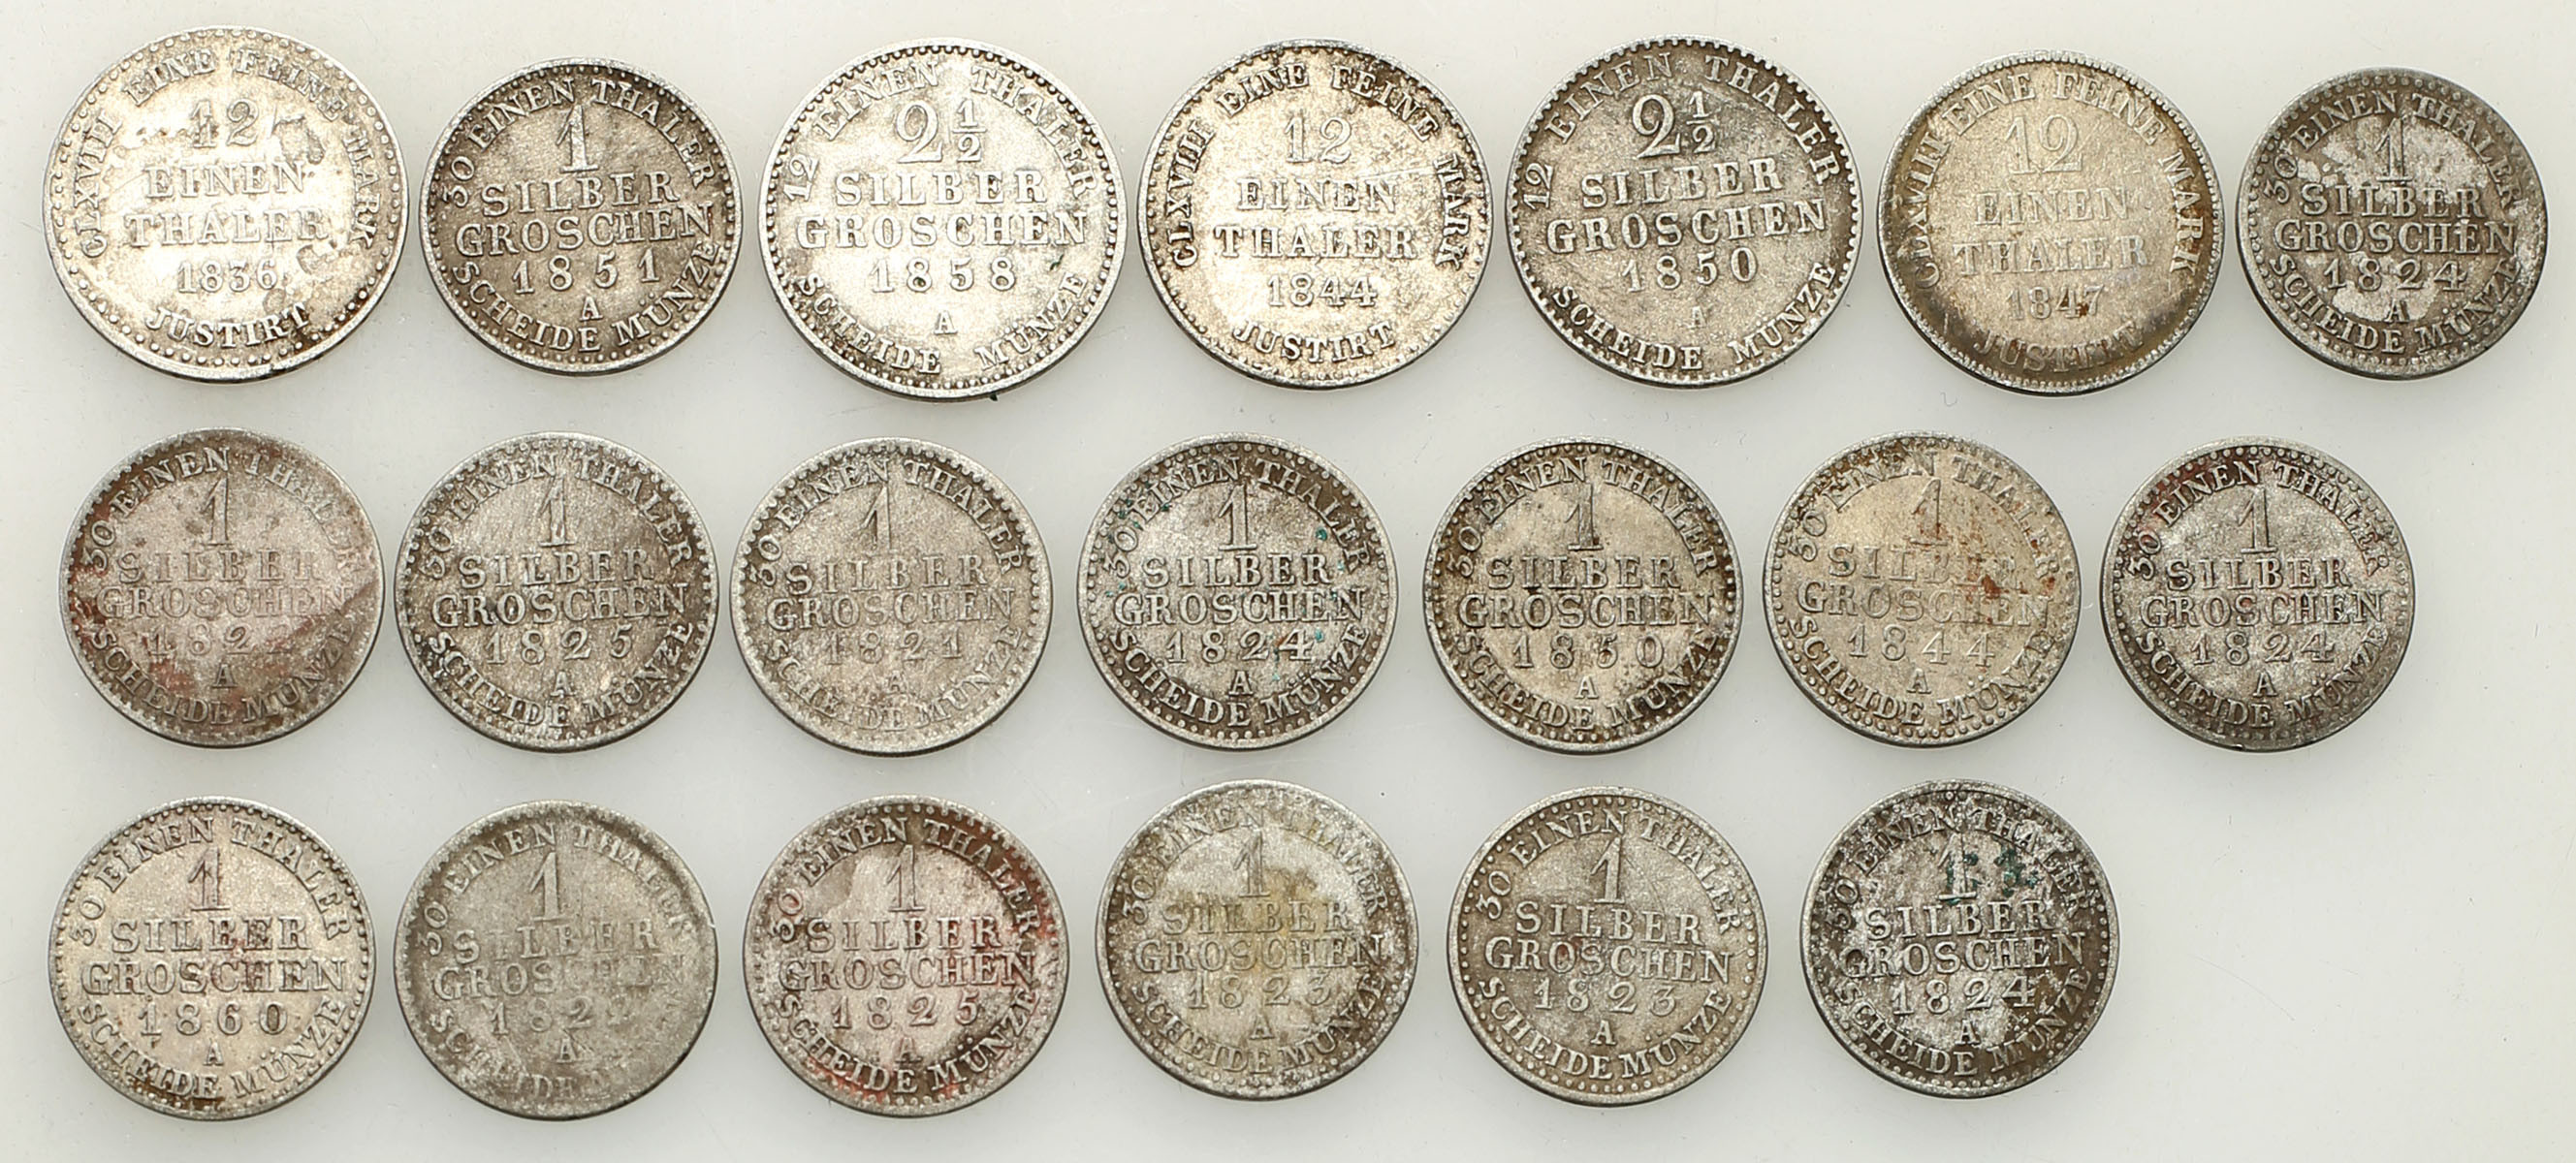 Niemcy, Prusy. 1 do 2 1/2 silbergroschen, 1/12 talara 1821-1858, zestaw 20 monet